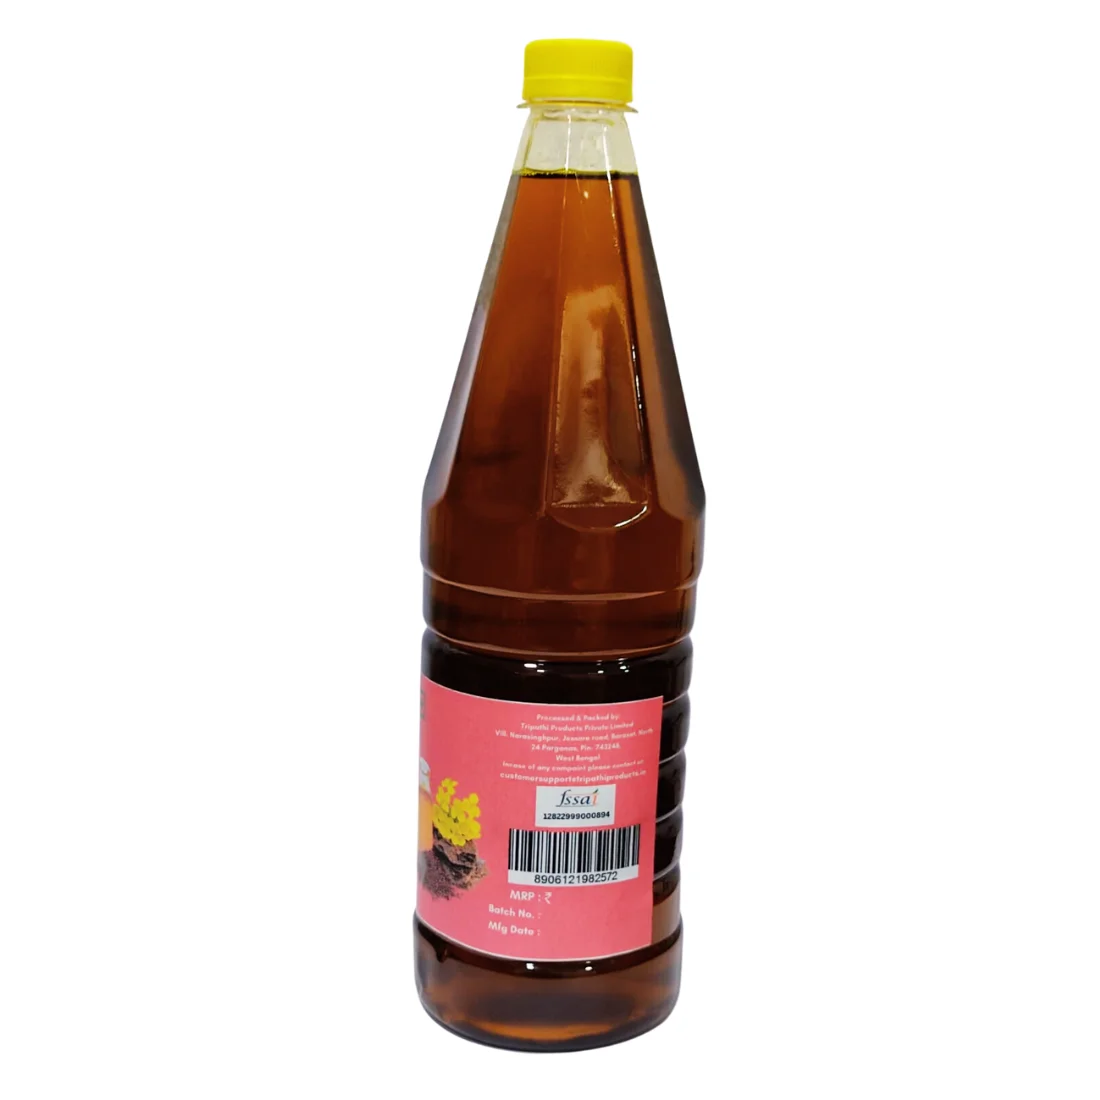 Tripathi Kachi Ghani Mustard Oil 1 Lit